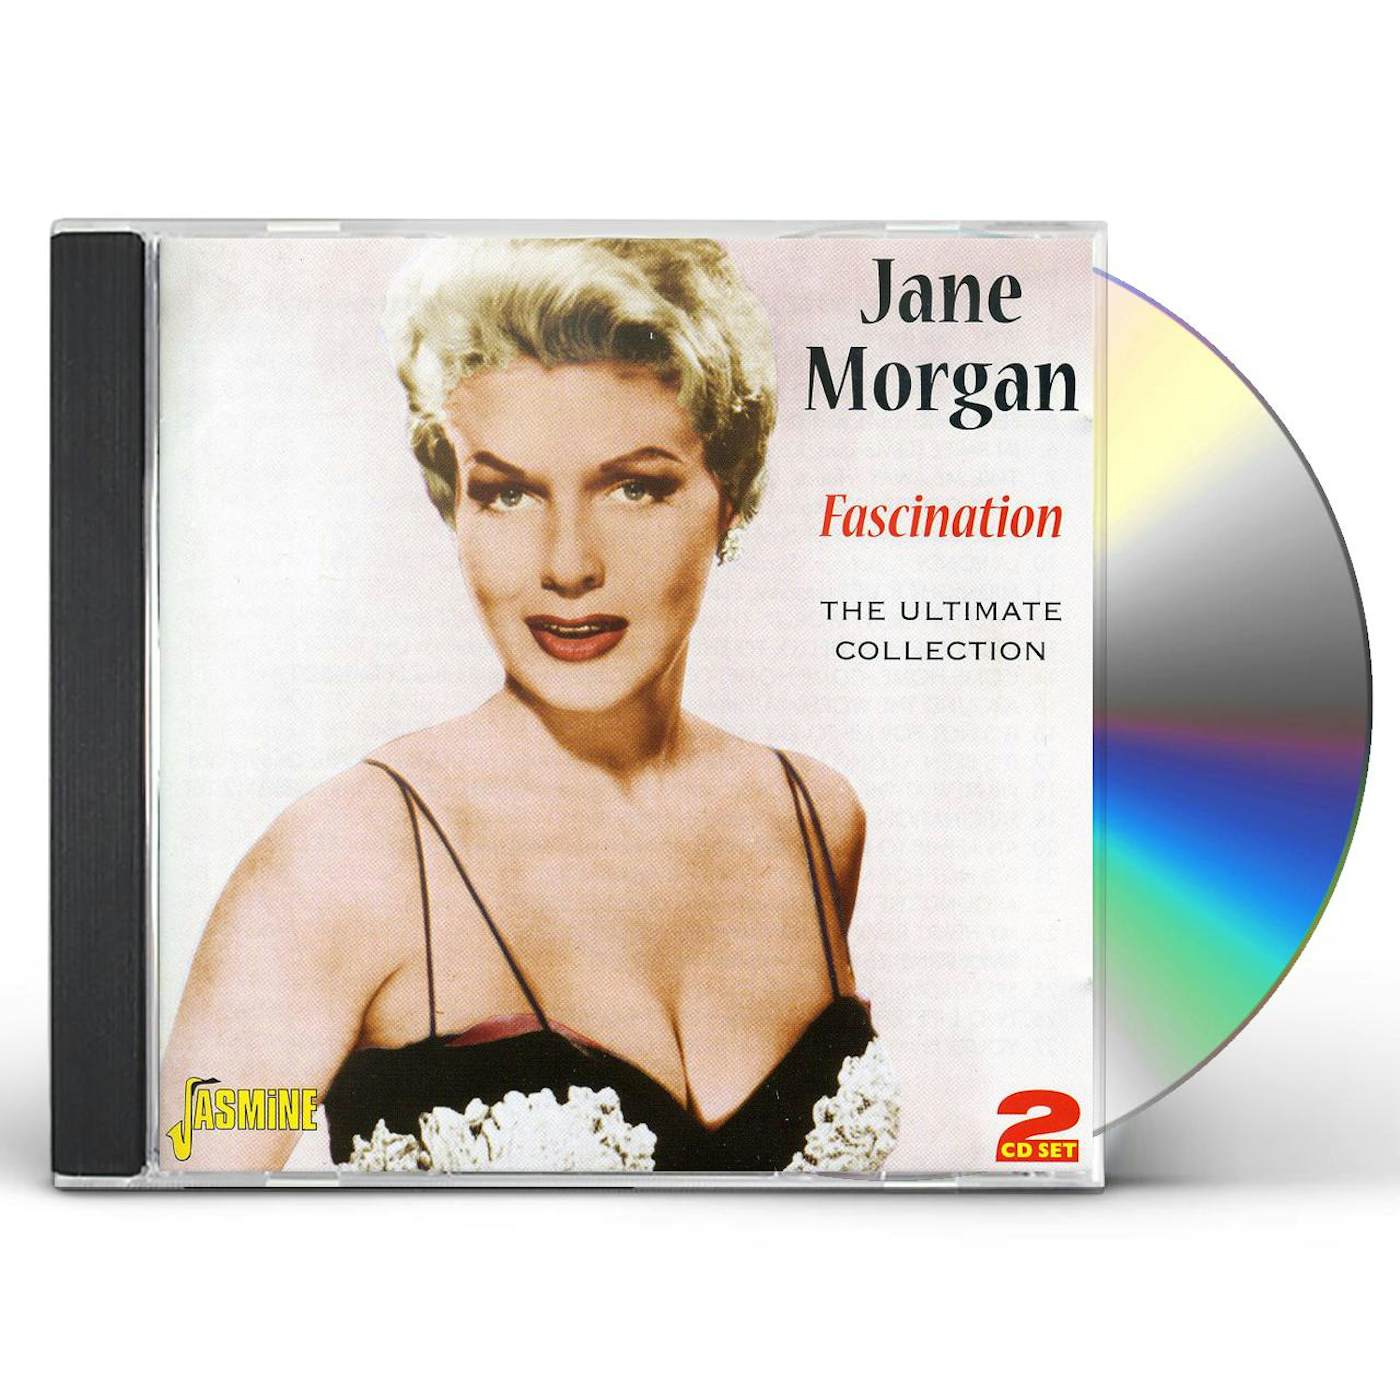 Jane Morgan FASCINATION CD